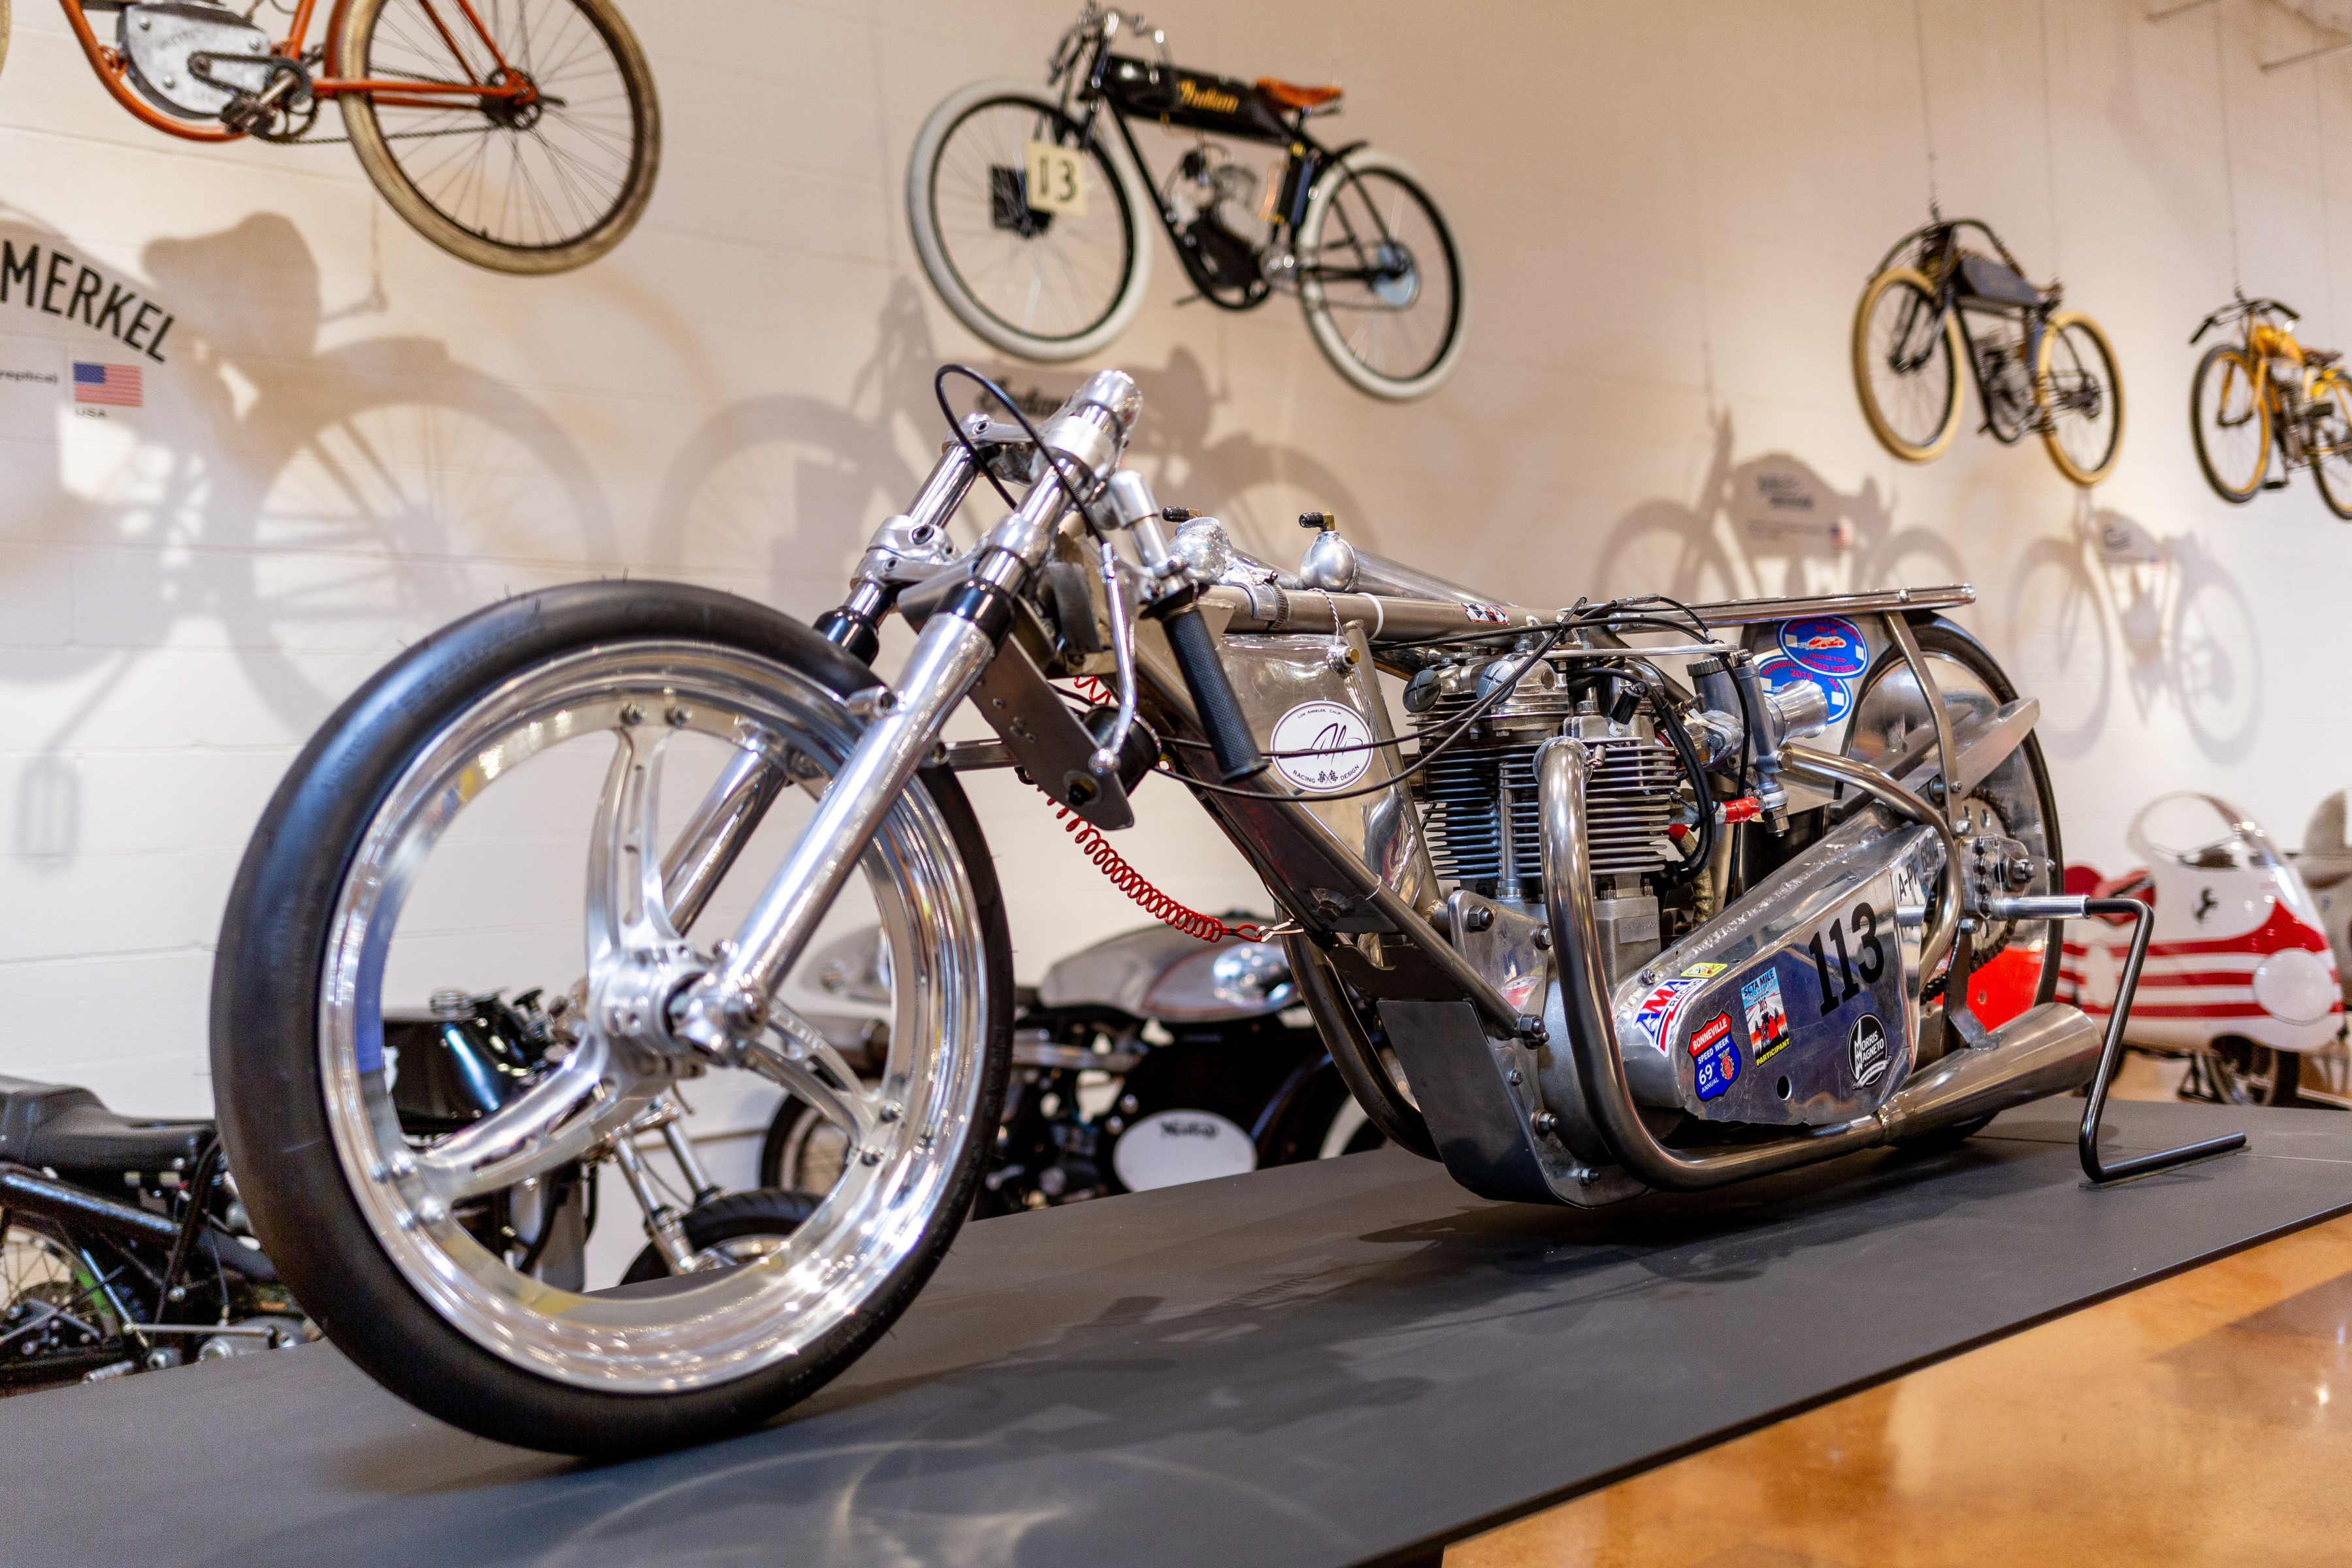 2014 Asymmetric Aero 650cc by Alp Sungurtekin -  - Viewing Room - Haas Moto Museum Blog